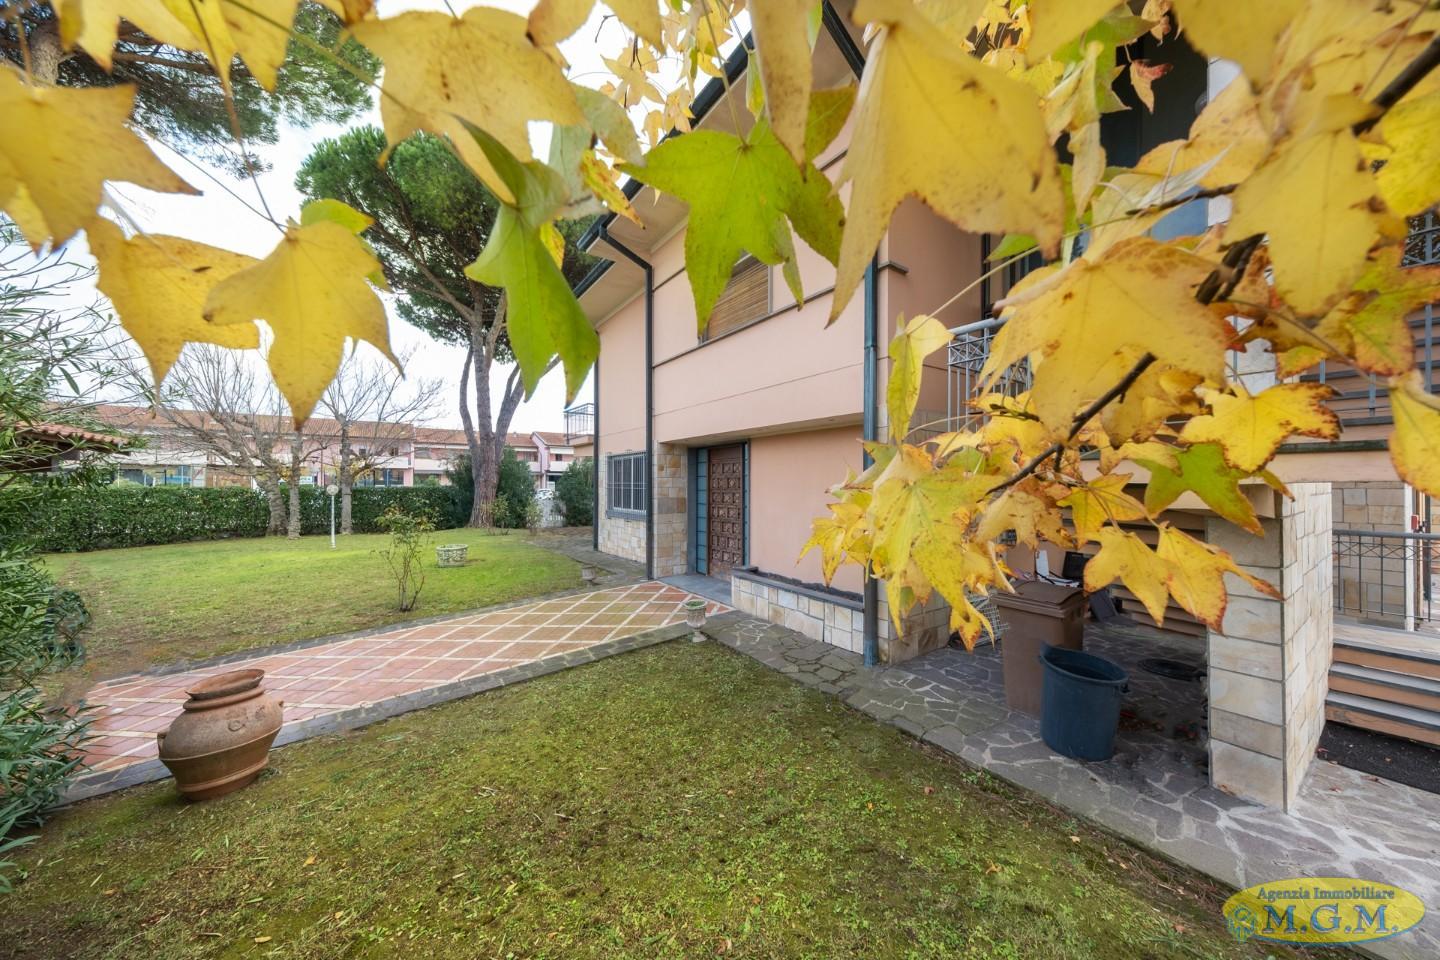 Mgmnet.it: Villa singola in vendita a Bientina